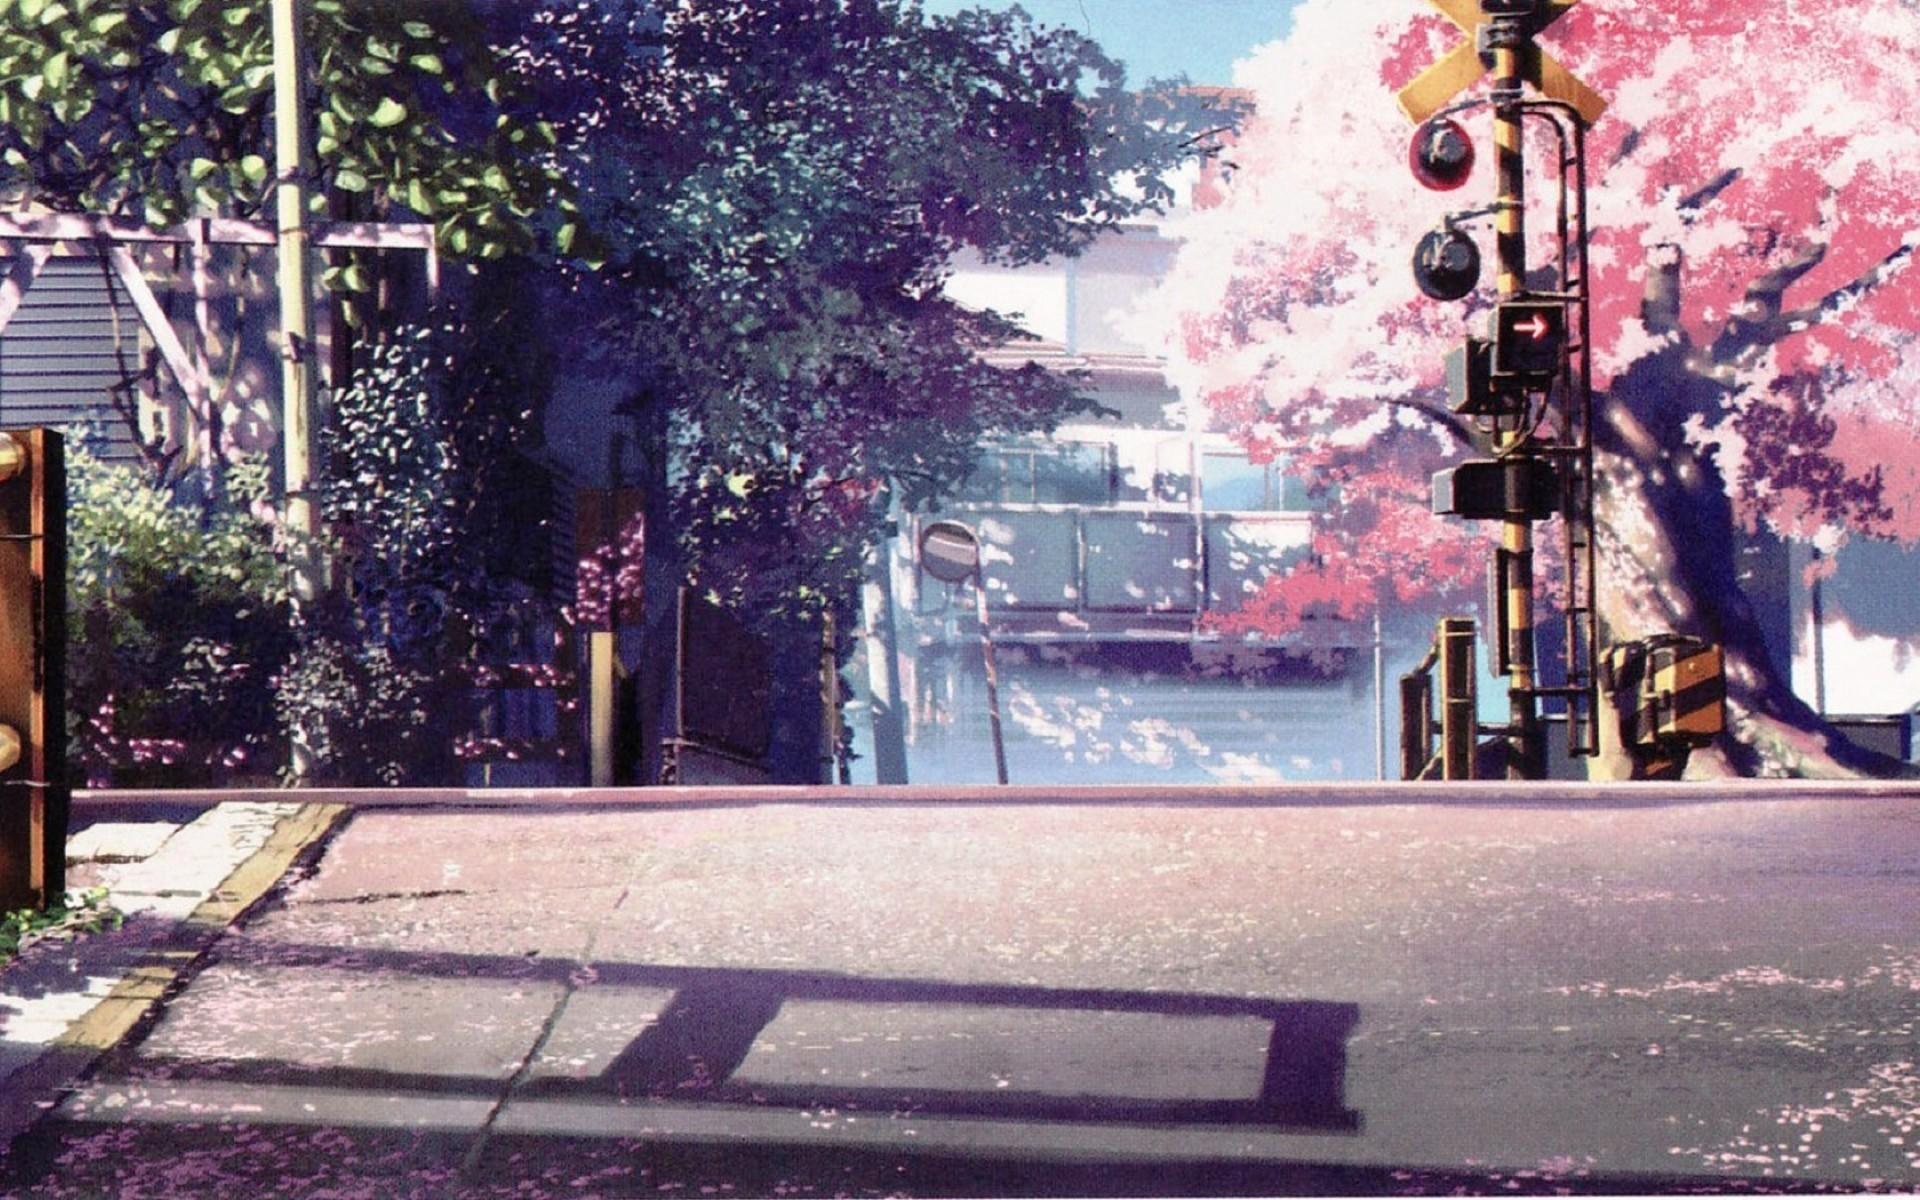 Night anime street - urban post - Imgur